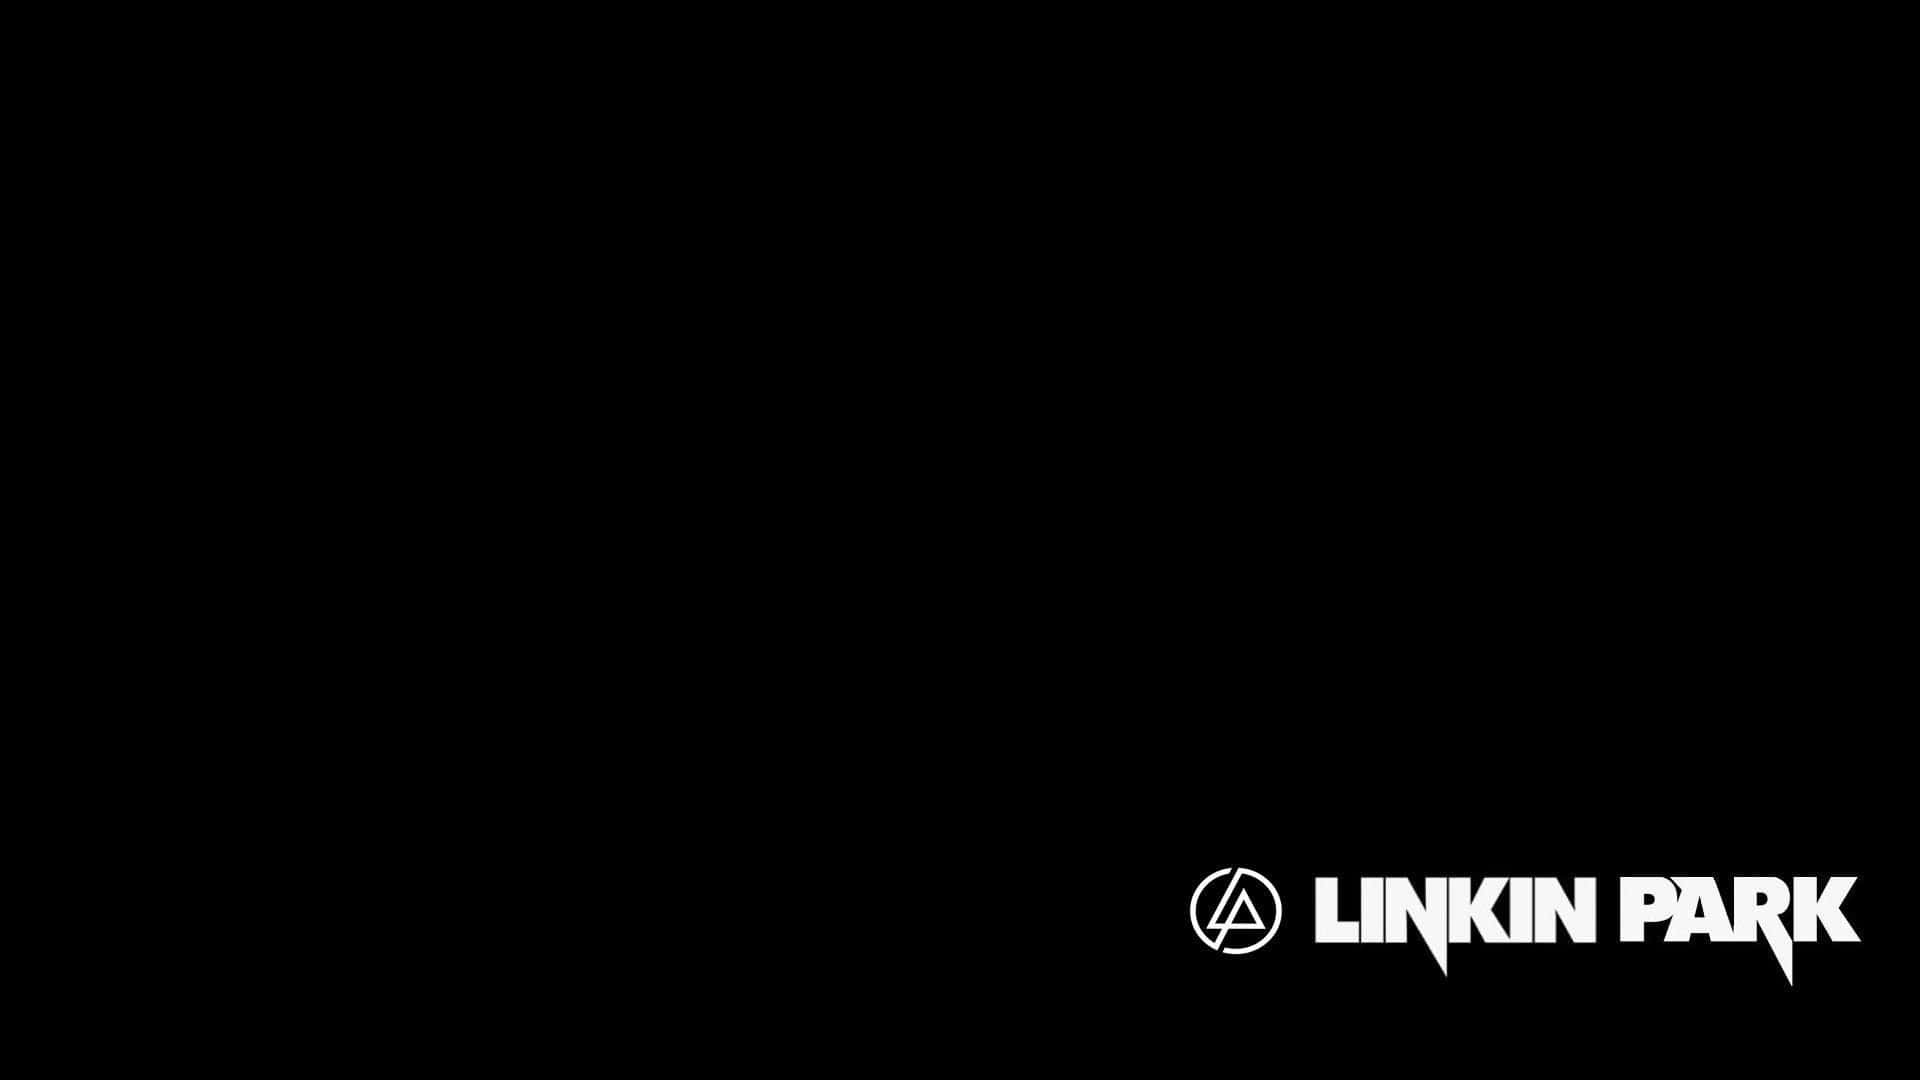 Linkin Park Logo On A Black Background Wallpaper